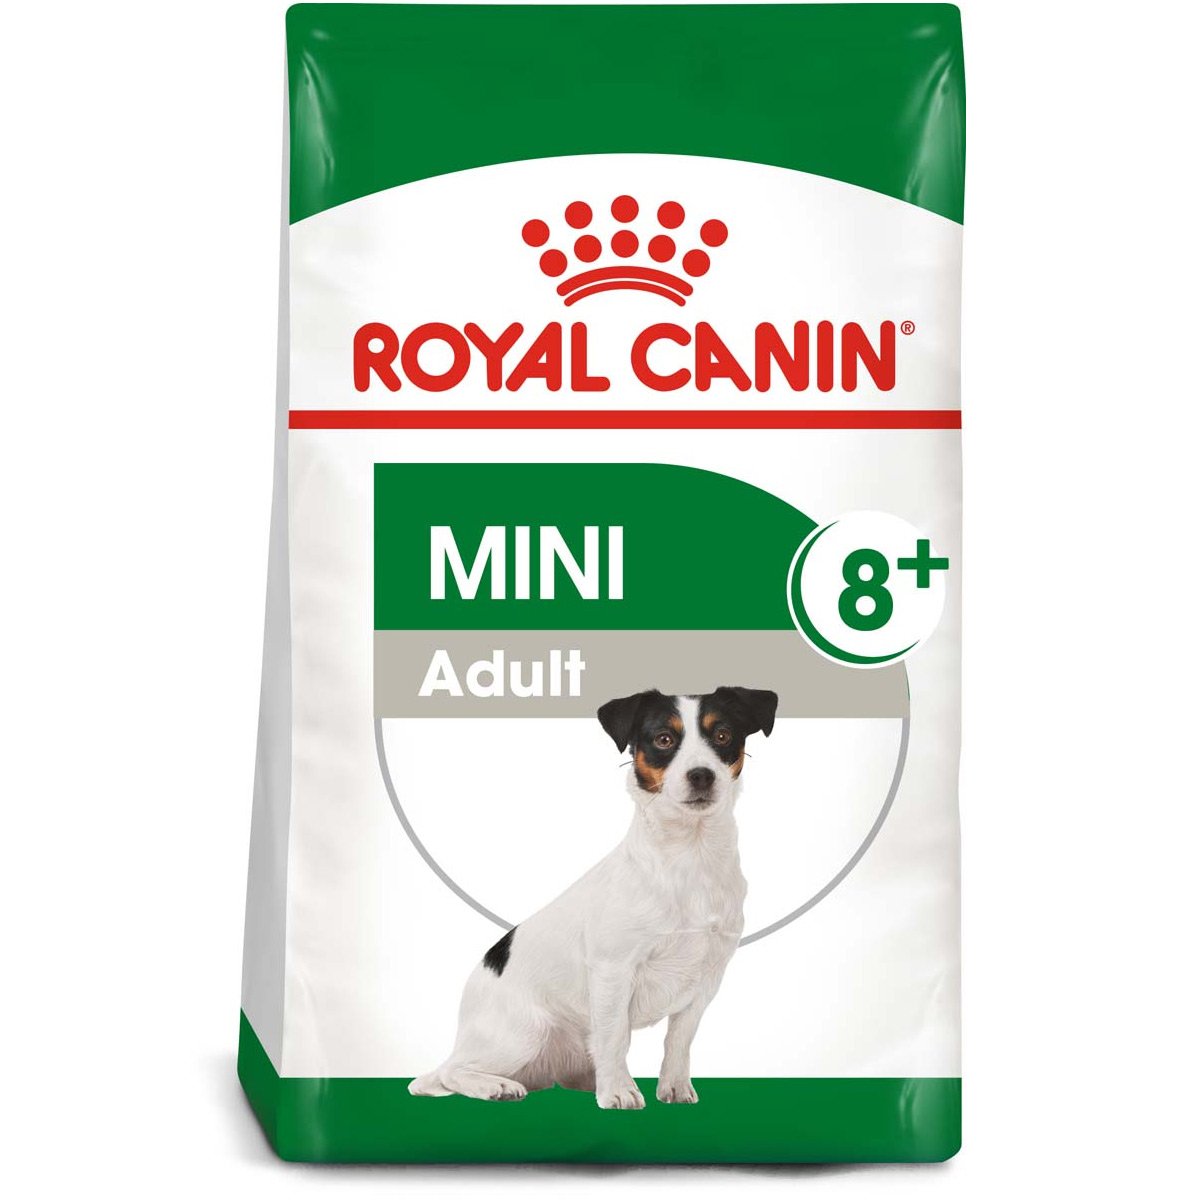 ROYAL CANIN MINI Adult 8+ Trockenfutter für ältere kleine Hunde 2kg von Royal Canin